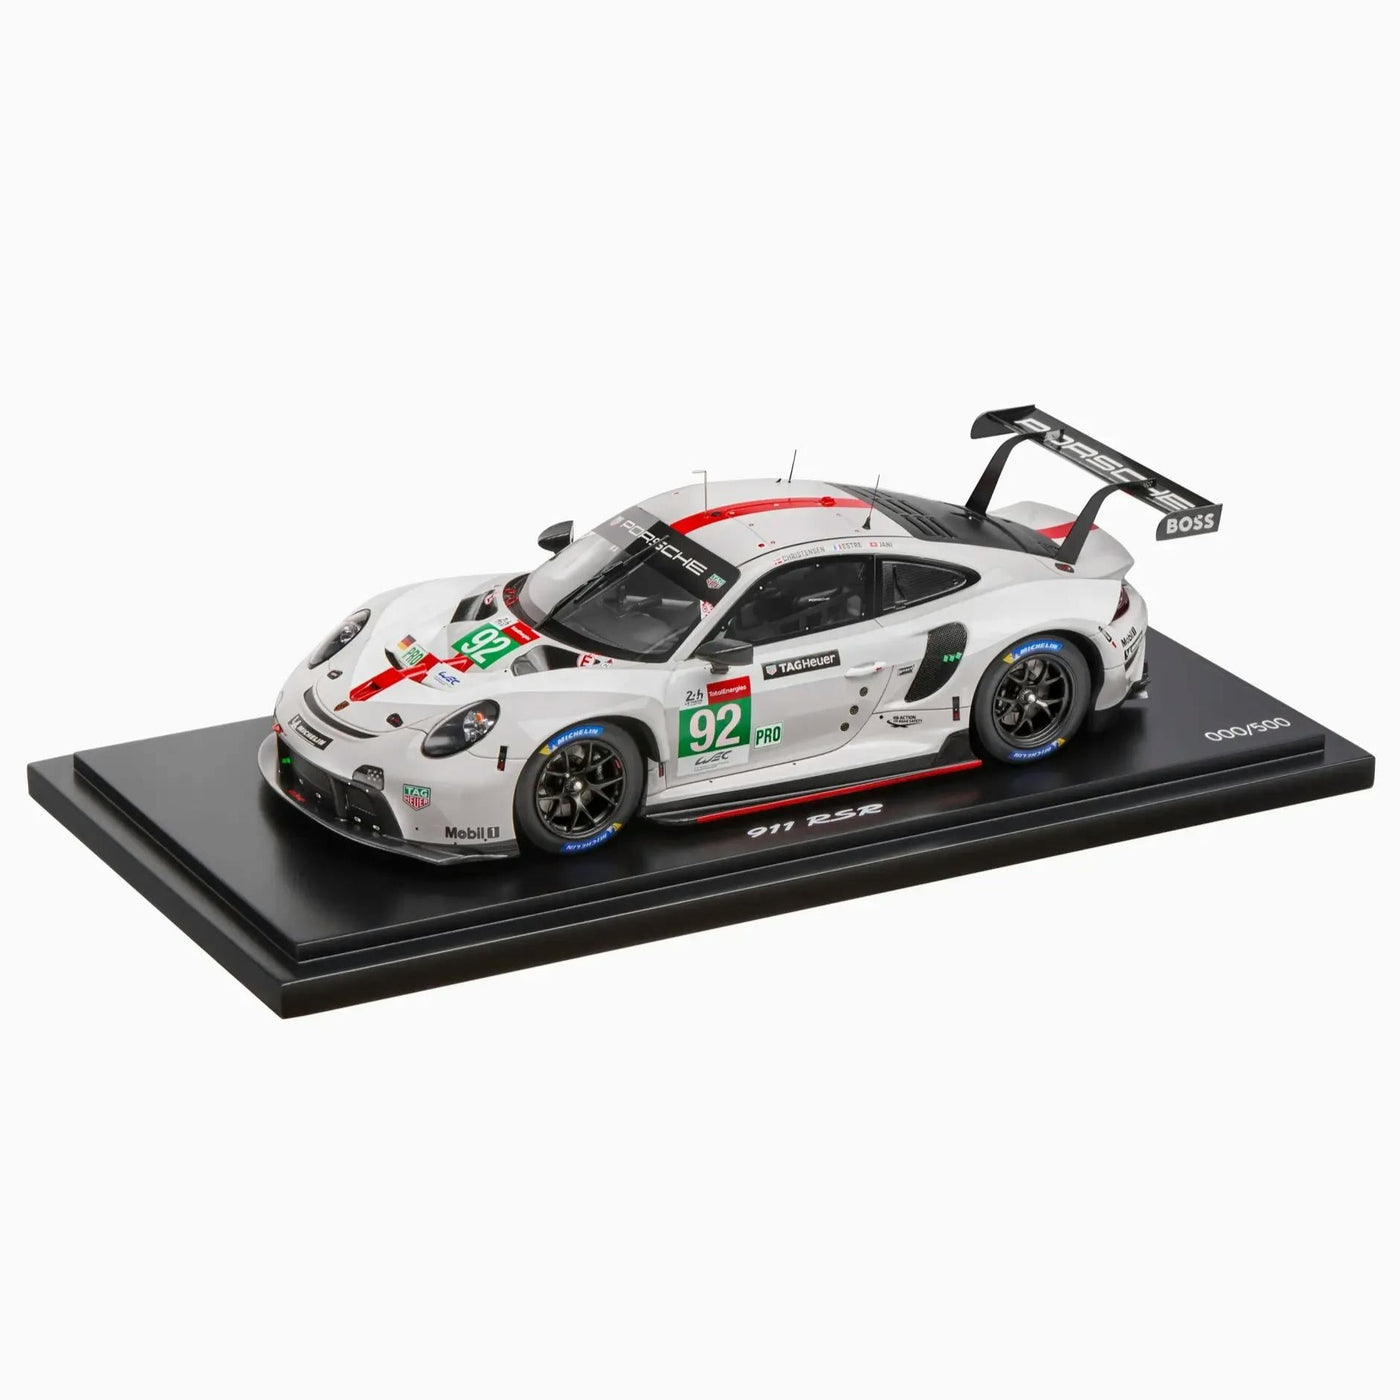 Porsche 911 RSR #91 24h Le Mans 2021 (991) Model Car 1:18